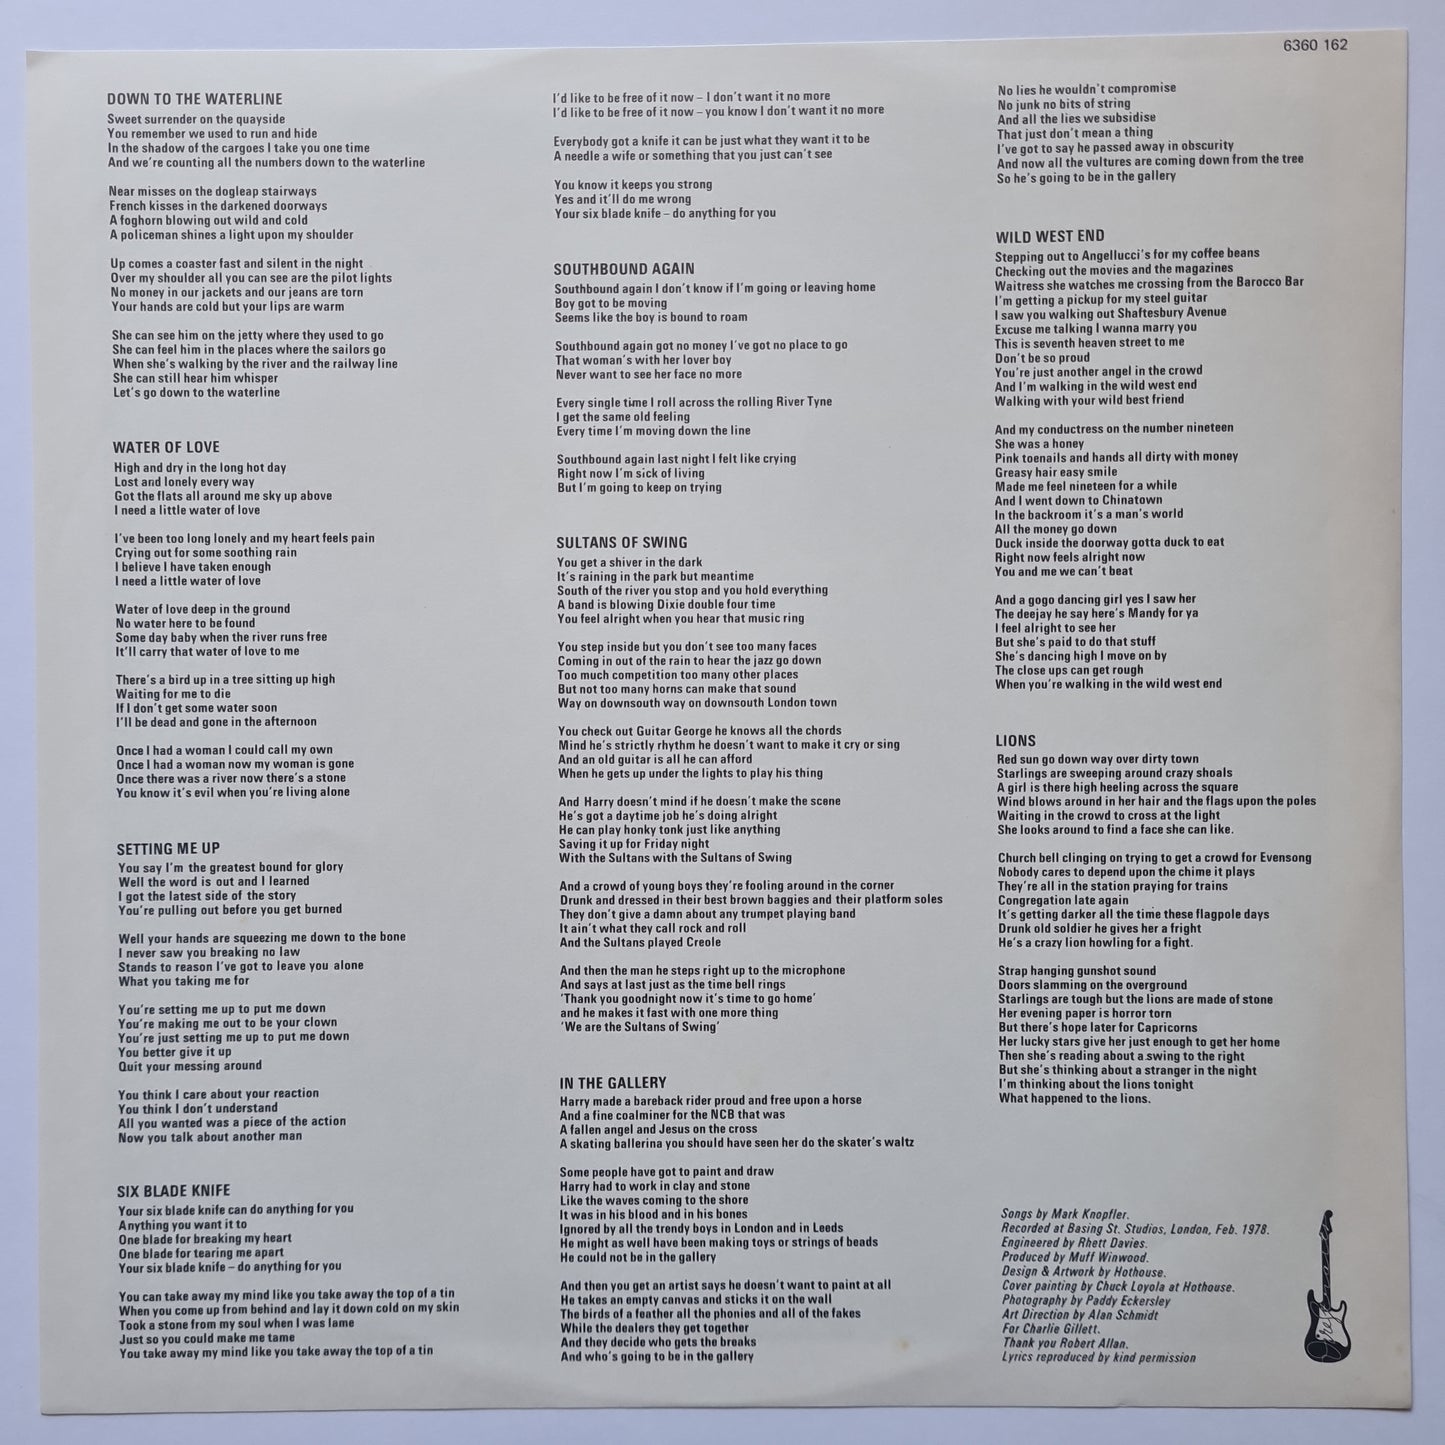 Dire Straits – Dire Straits - 1978 - Vinyl Record